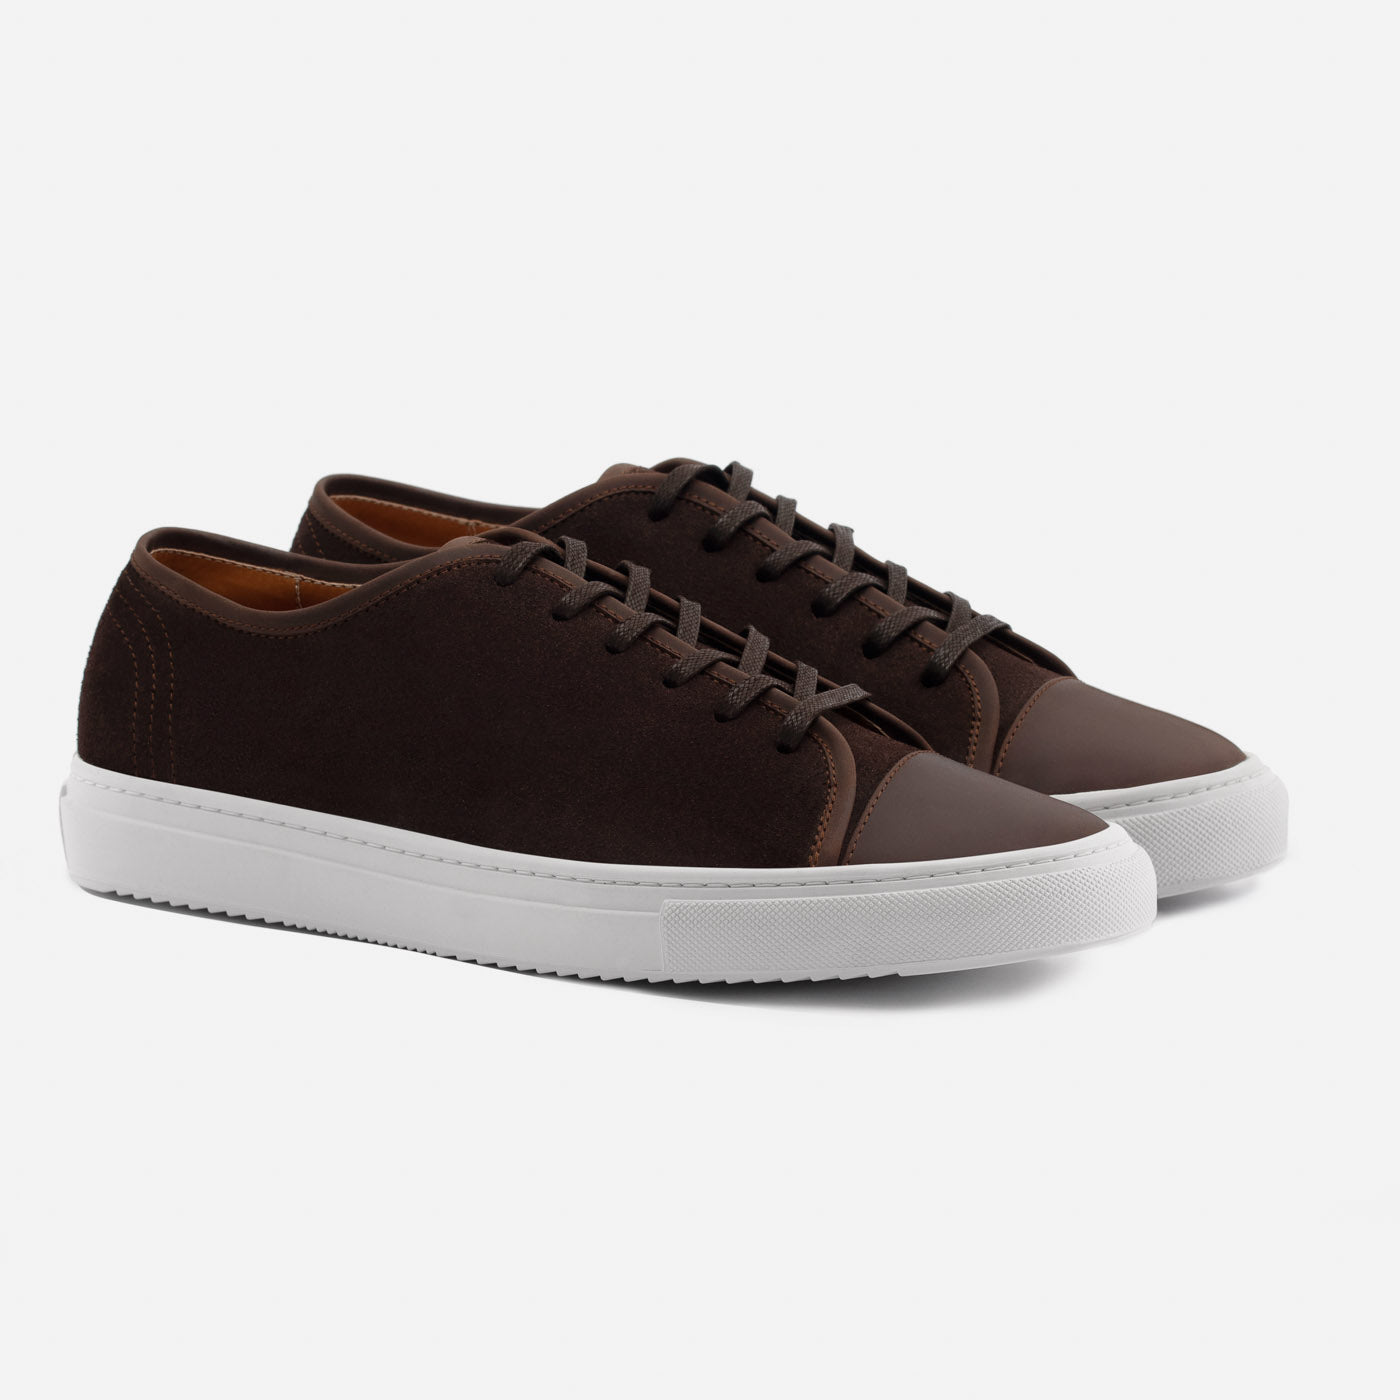 Prieto Sneakers - Suede/Leather - Men's